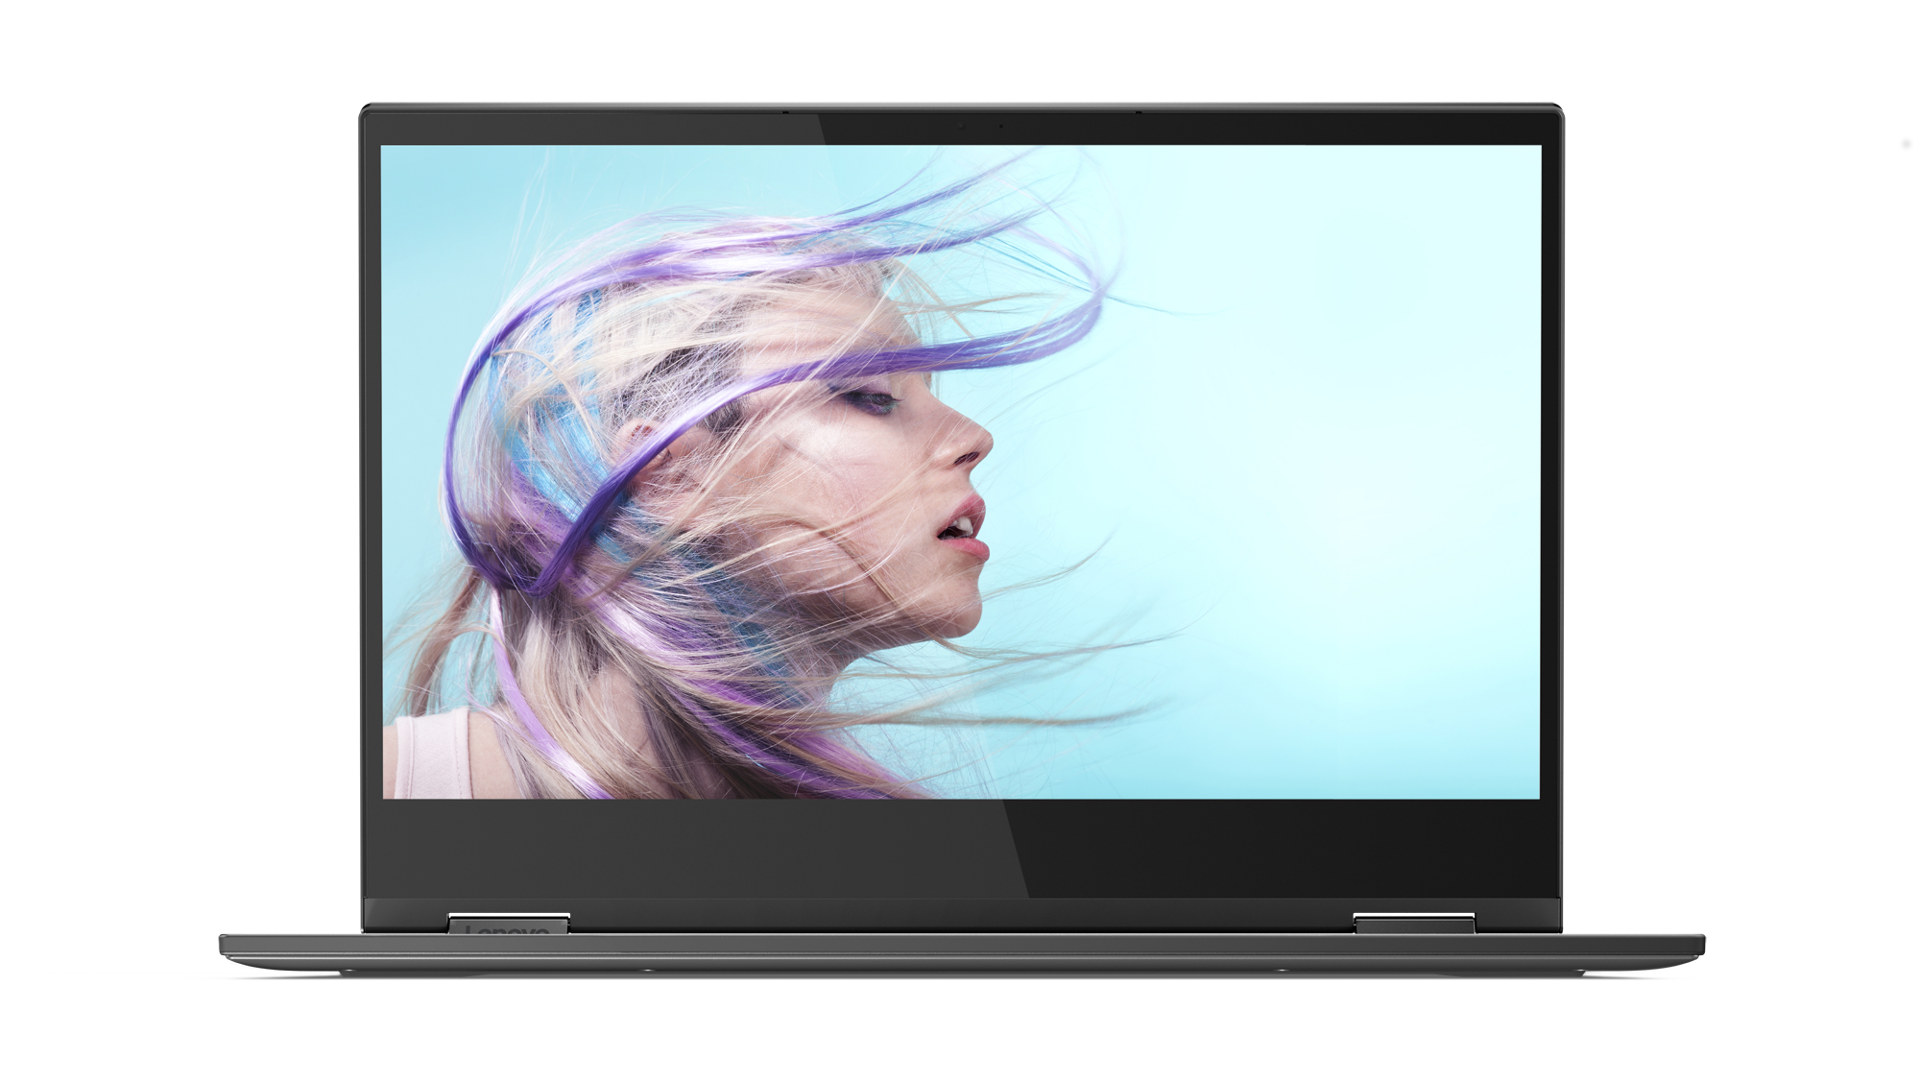 The Lenovo Yoga C630 viewed head-on.